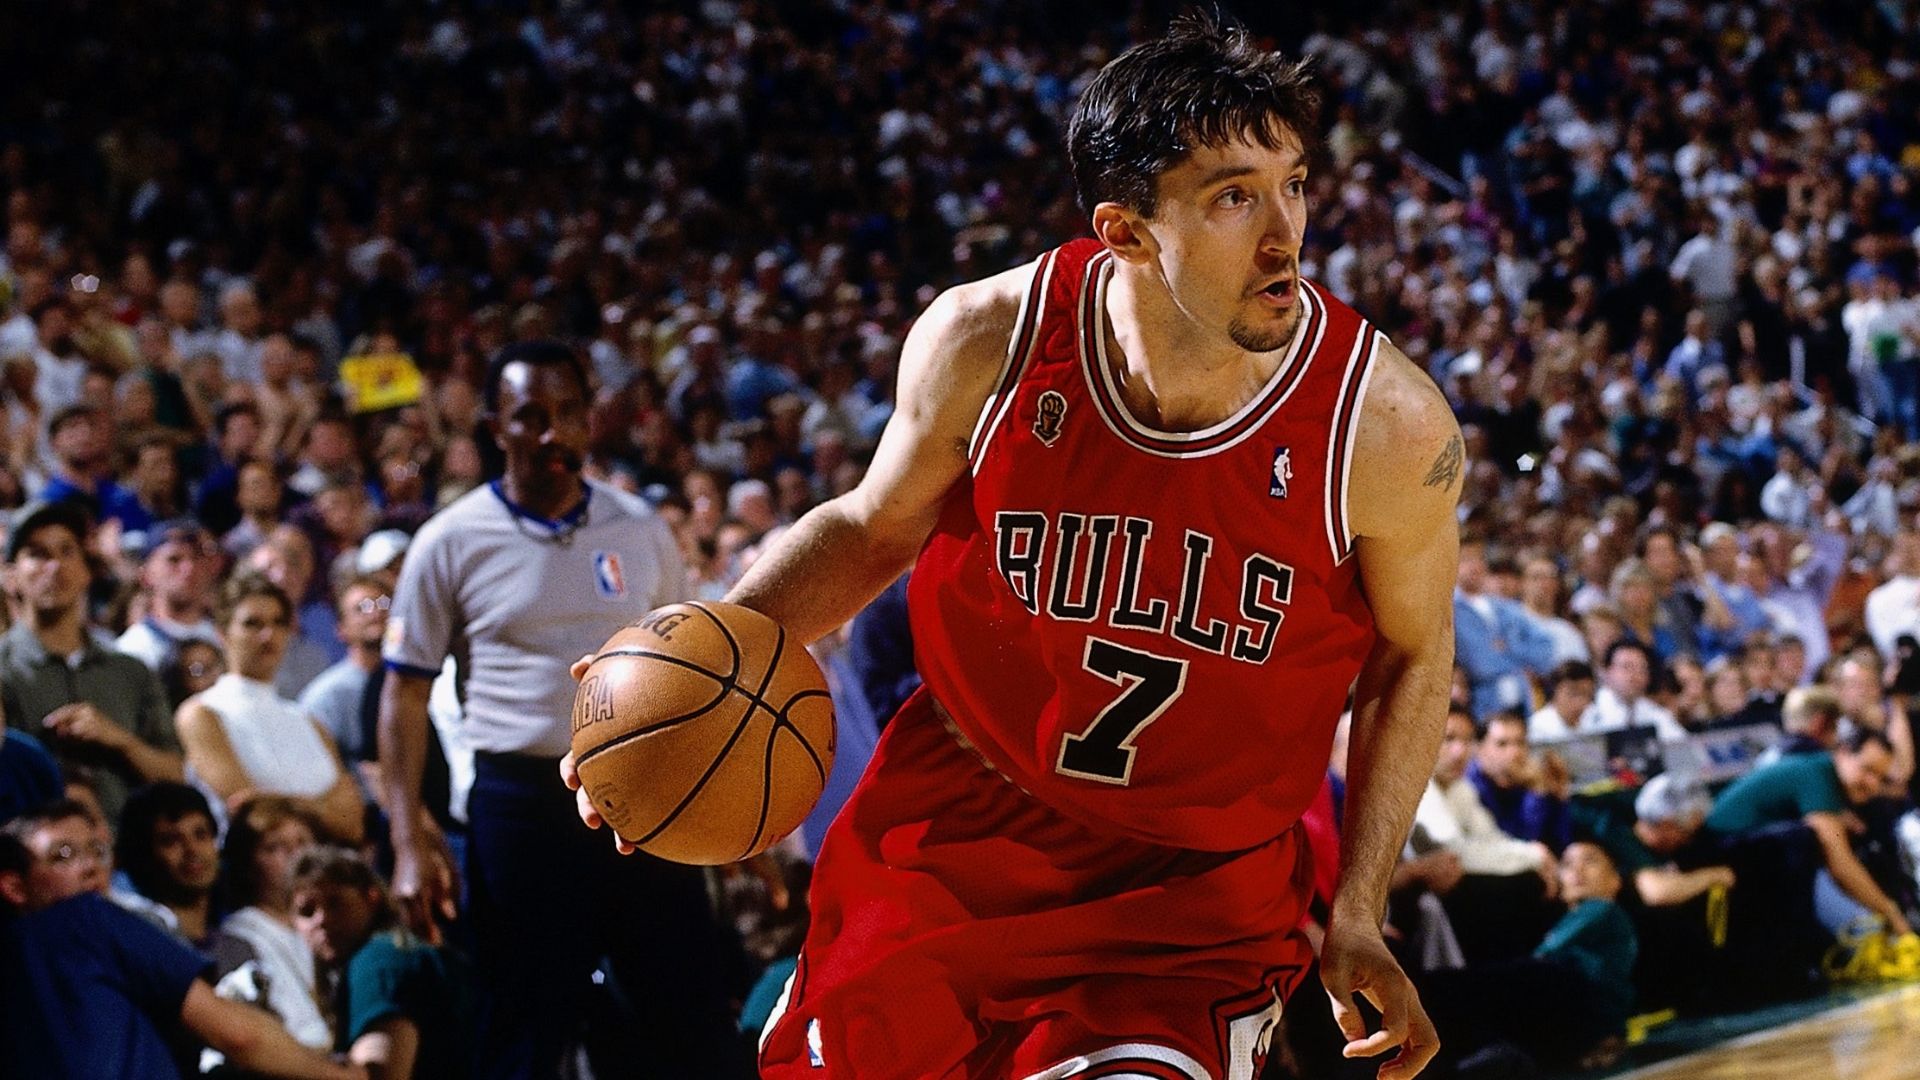 Toni Kukoc's best moments with the Bulls - ESPN Video